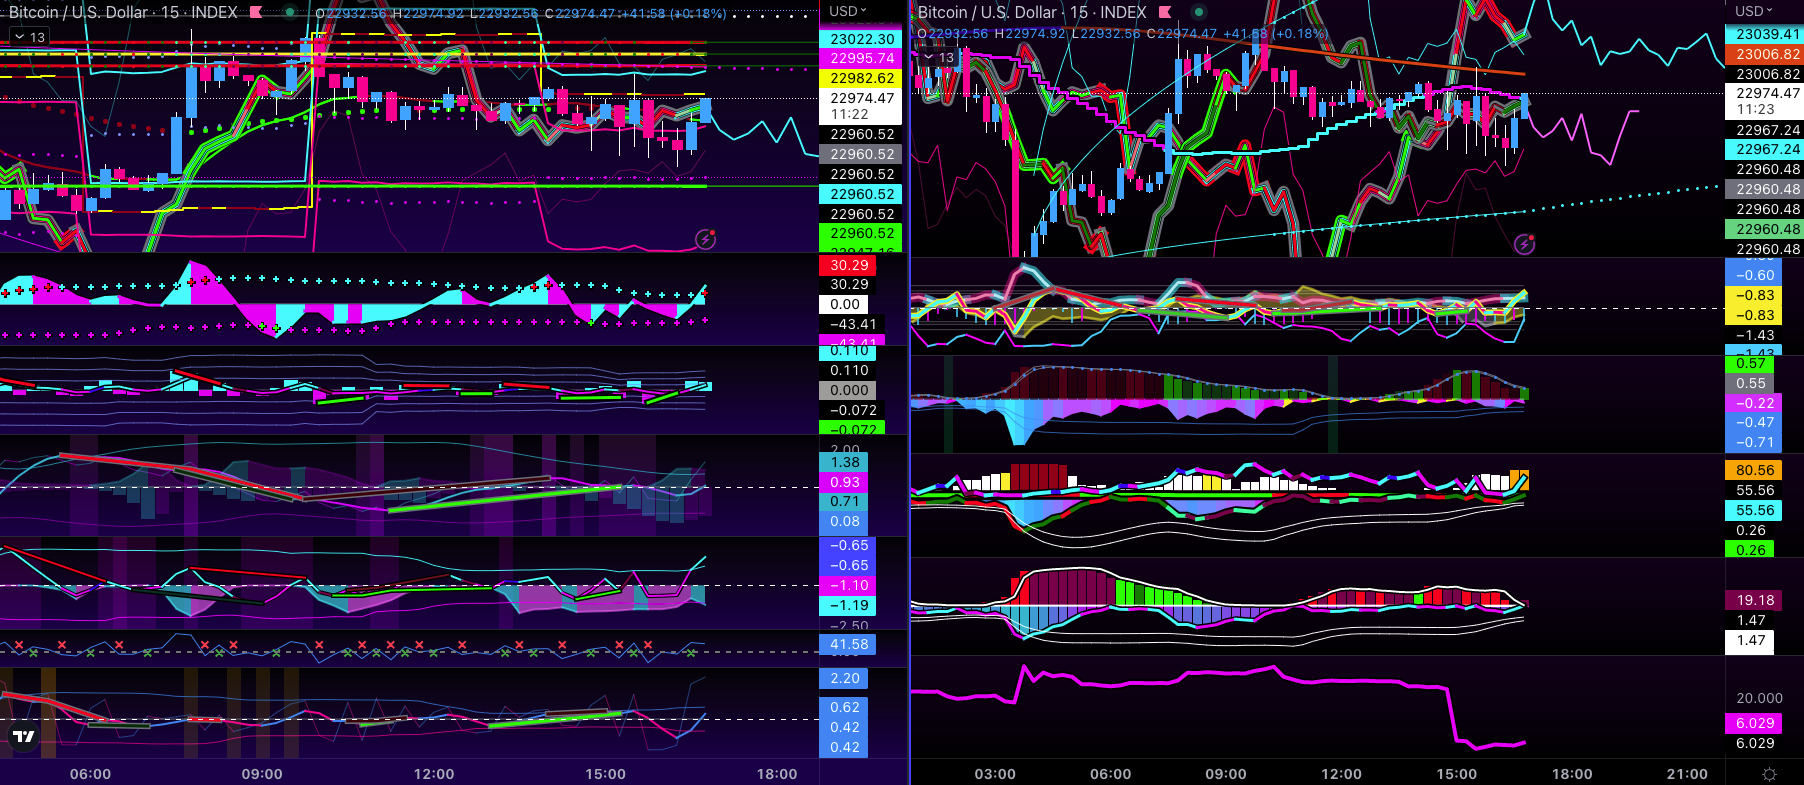 alpha trading VEPS indicators on bitcoin 15 min tf chart on tradingview